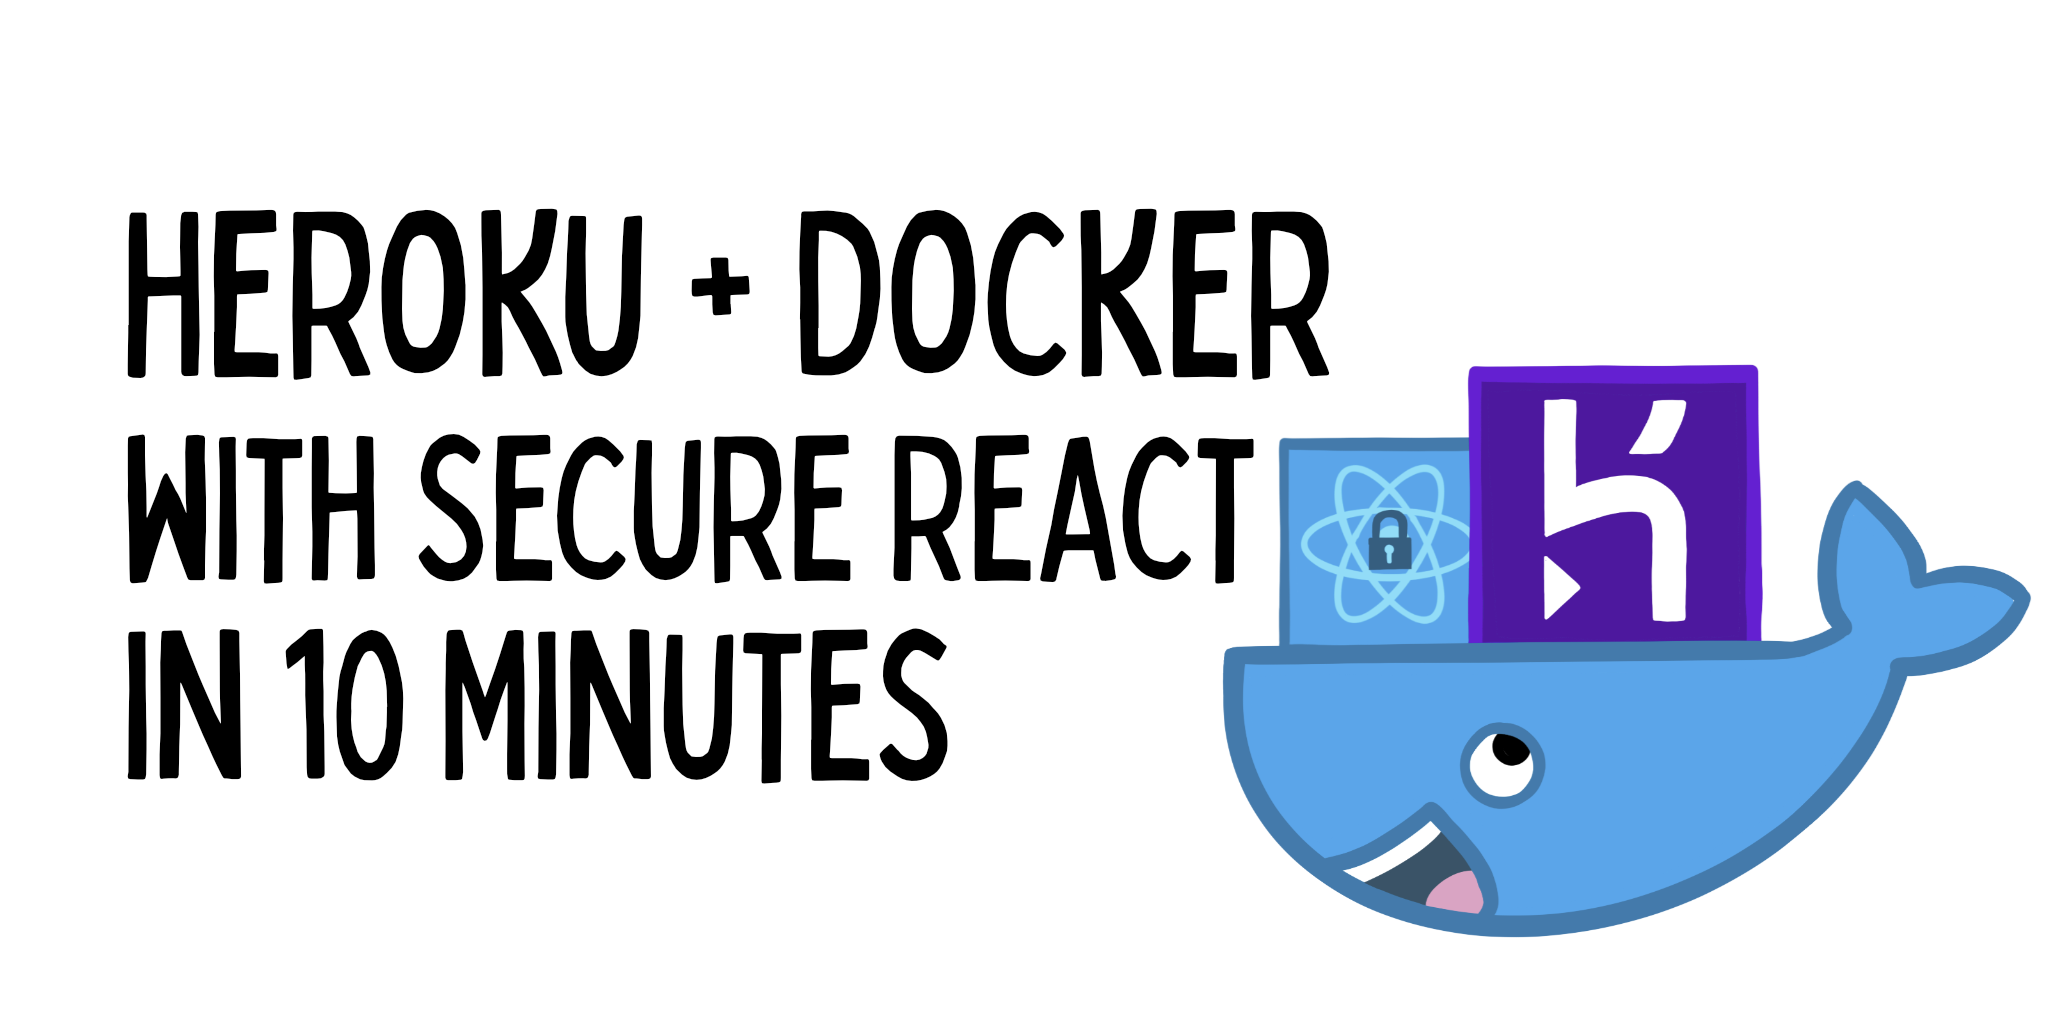 Heroku + Docker with Secure React in 10 Minutes